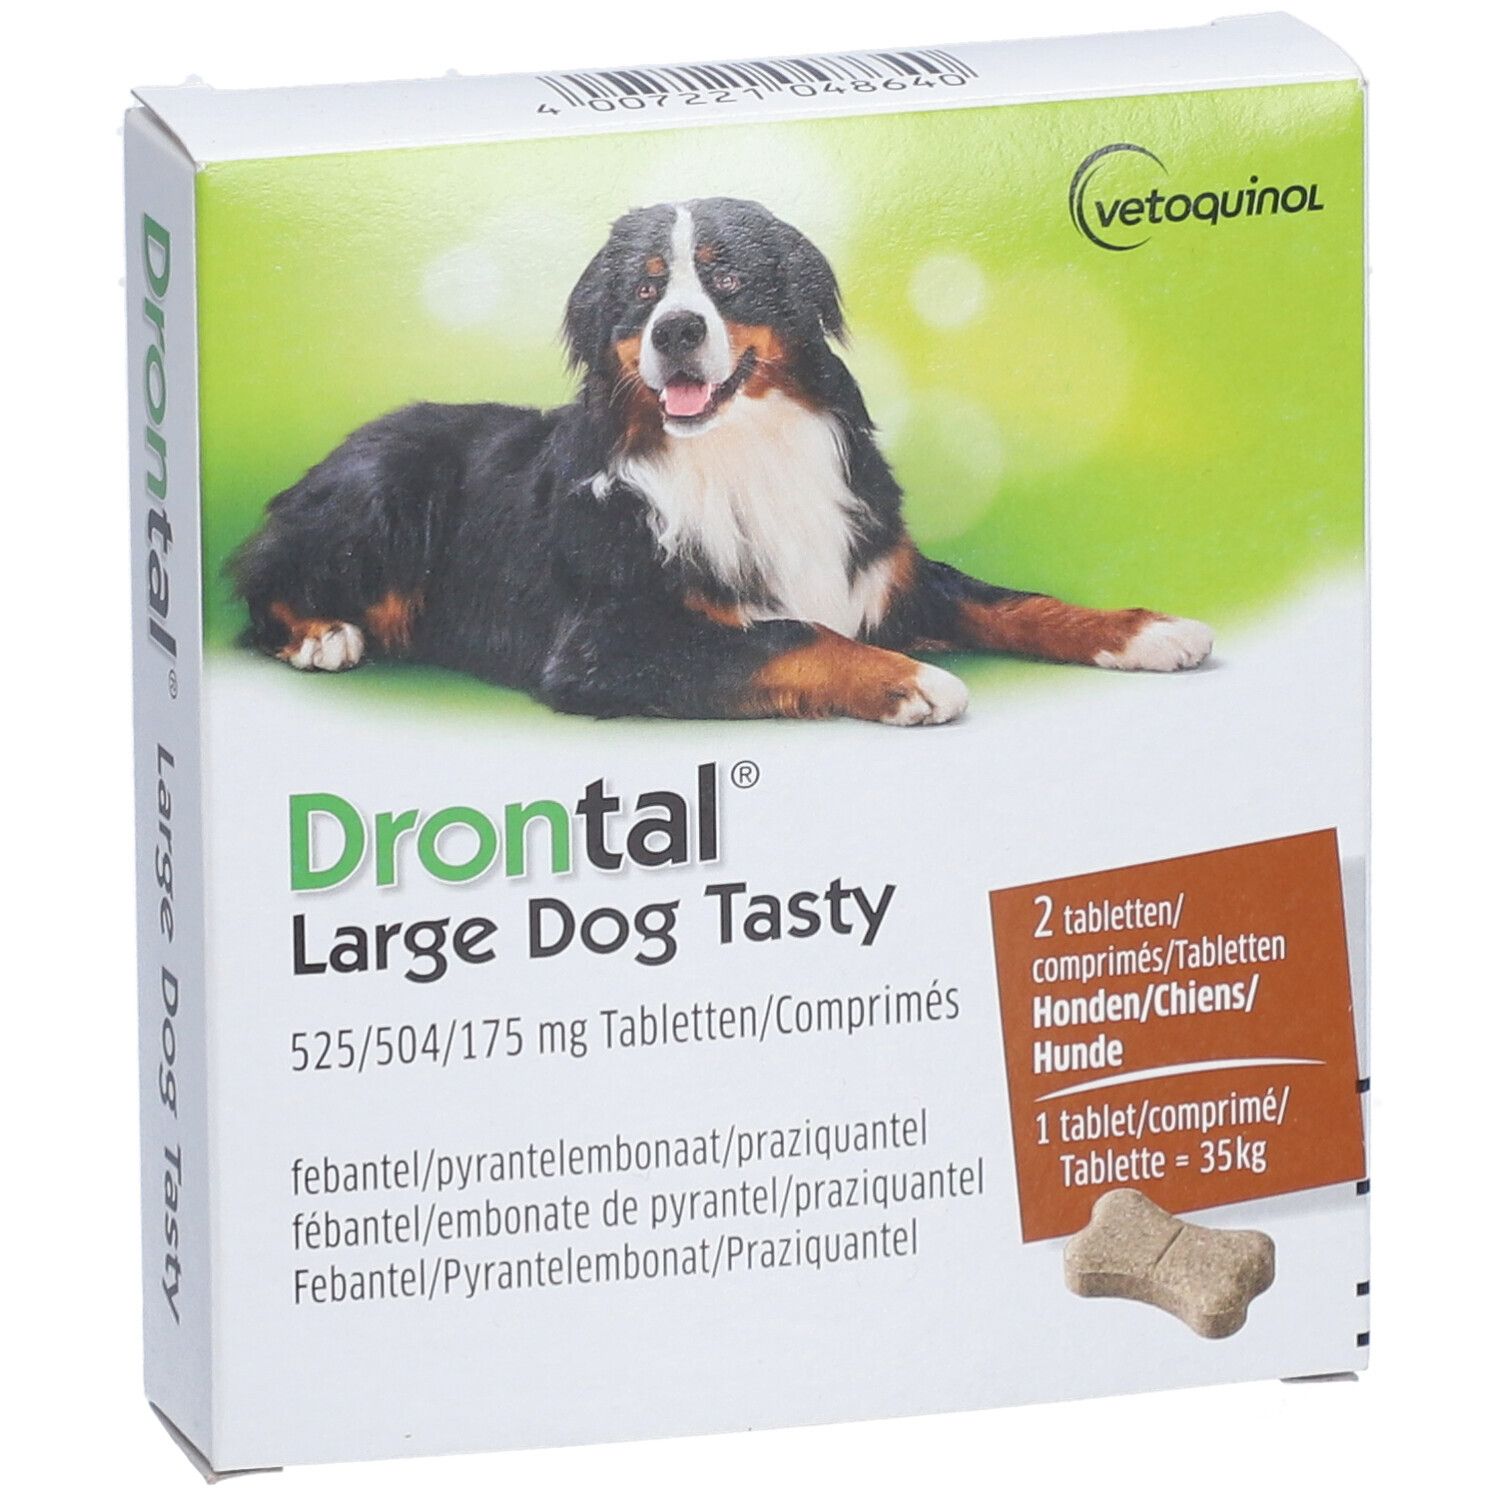 Drontal® Large Dog Tasty 525/504/175mg